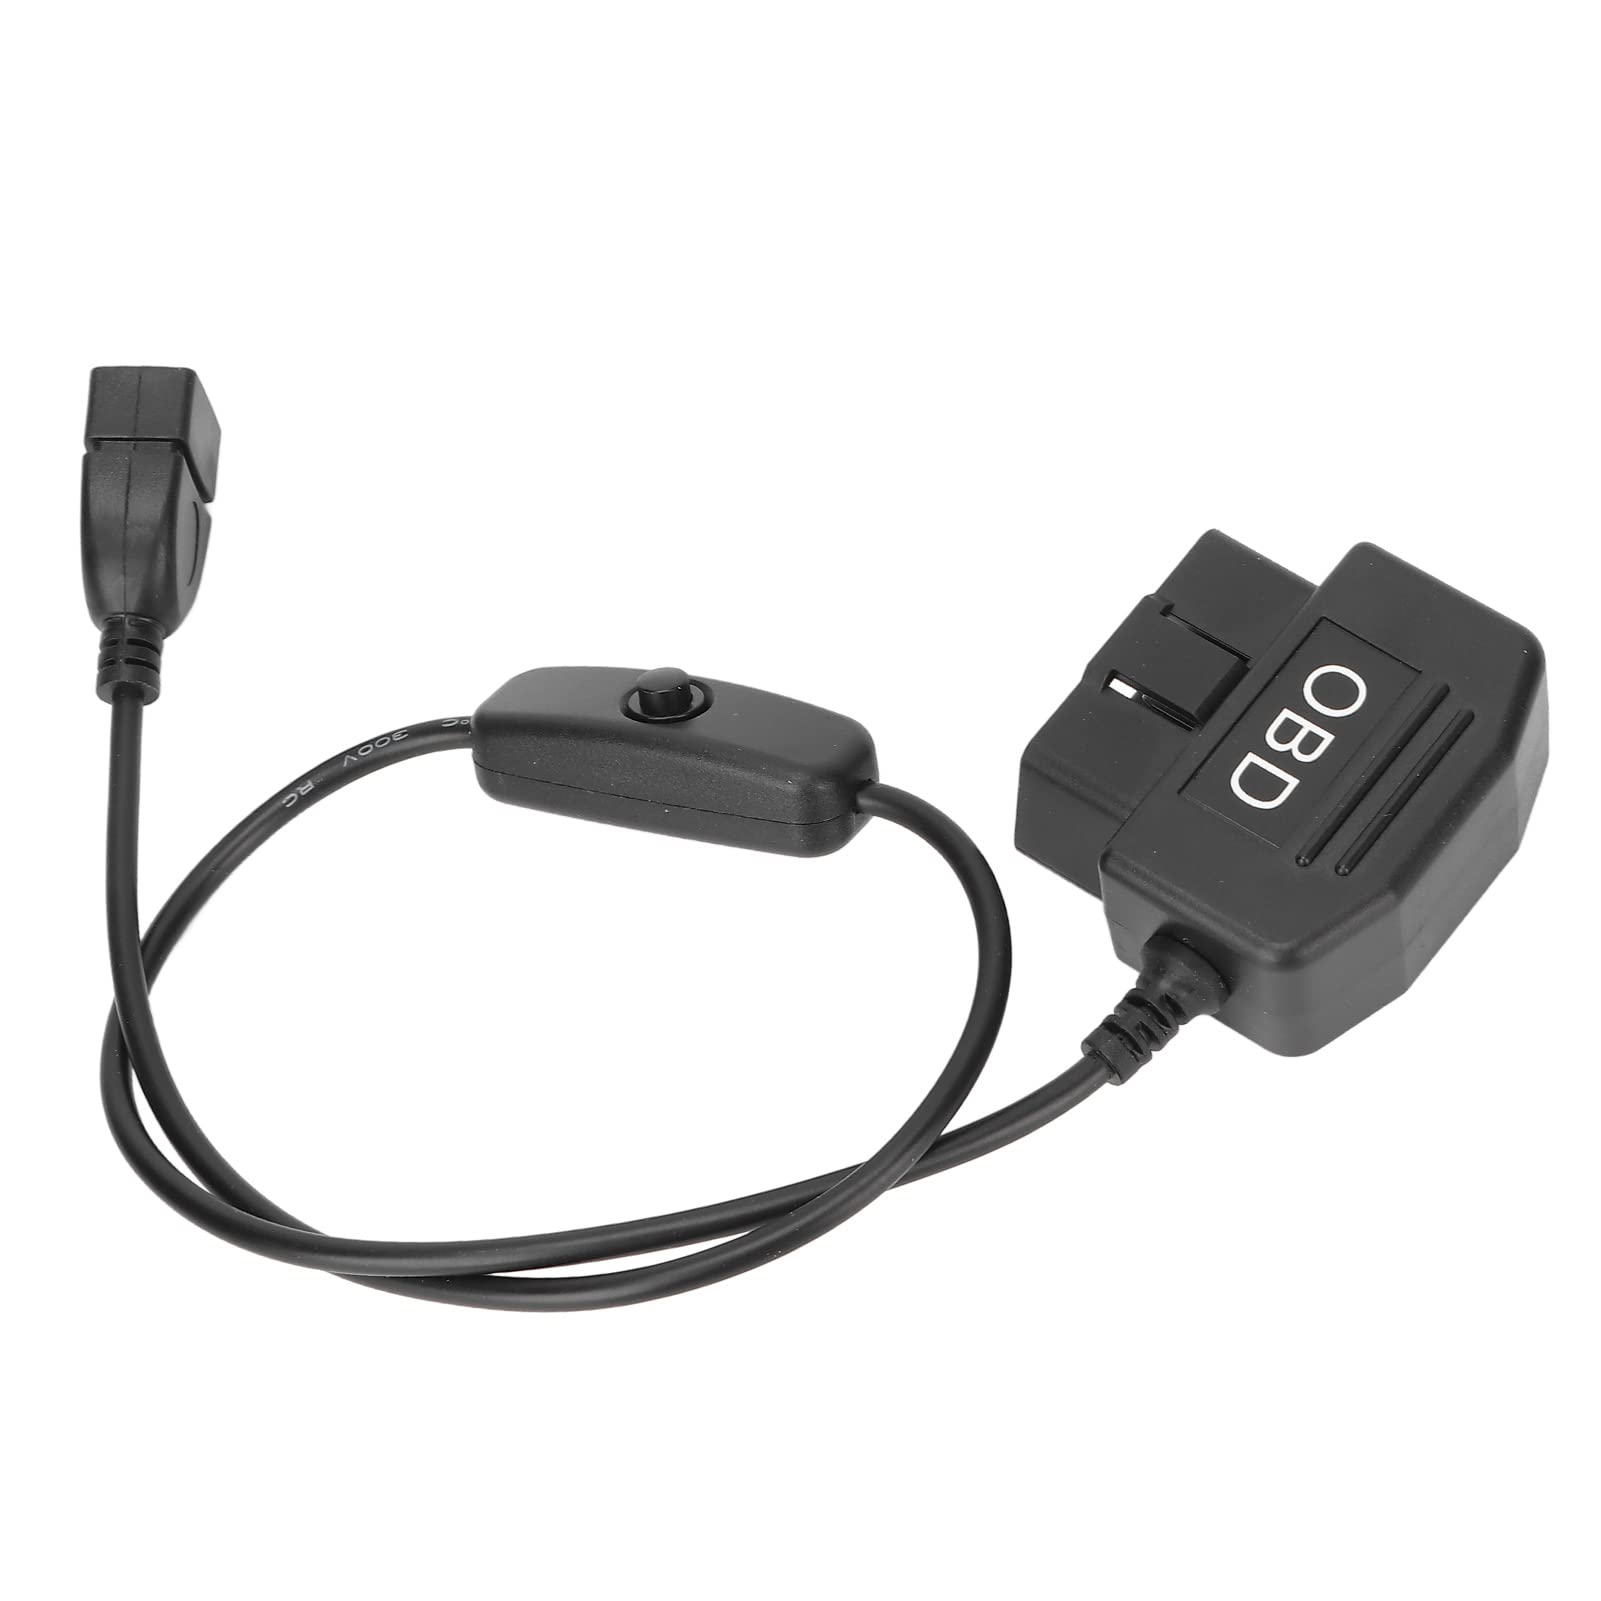 16-poliger OBD2-Stecker, USB-Ladekabel, OBD-Adapterkabel, 18,9-Zoll-Universalstecker, Ladegerät, Fahrzeugzubehör von Leapiture